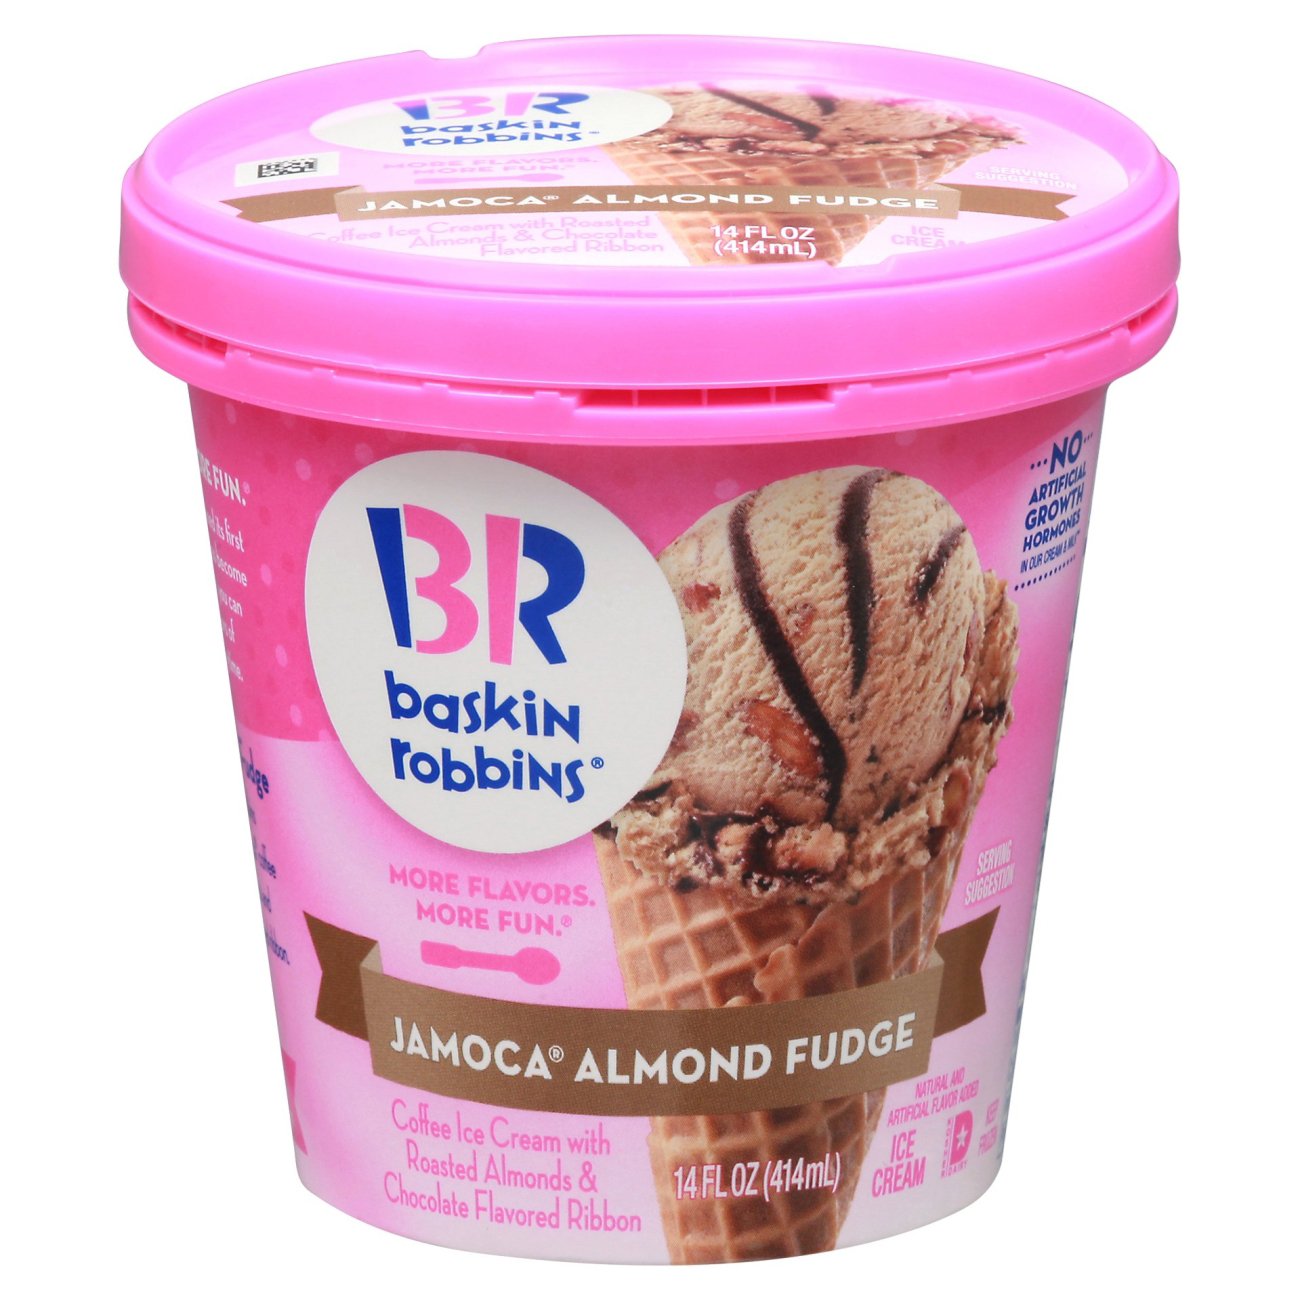 Baskin Robbins Jamoca Almond Fudge Ice Cream Shop Ice Cream at HEB